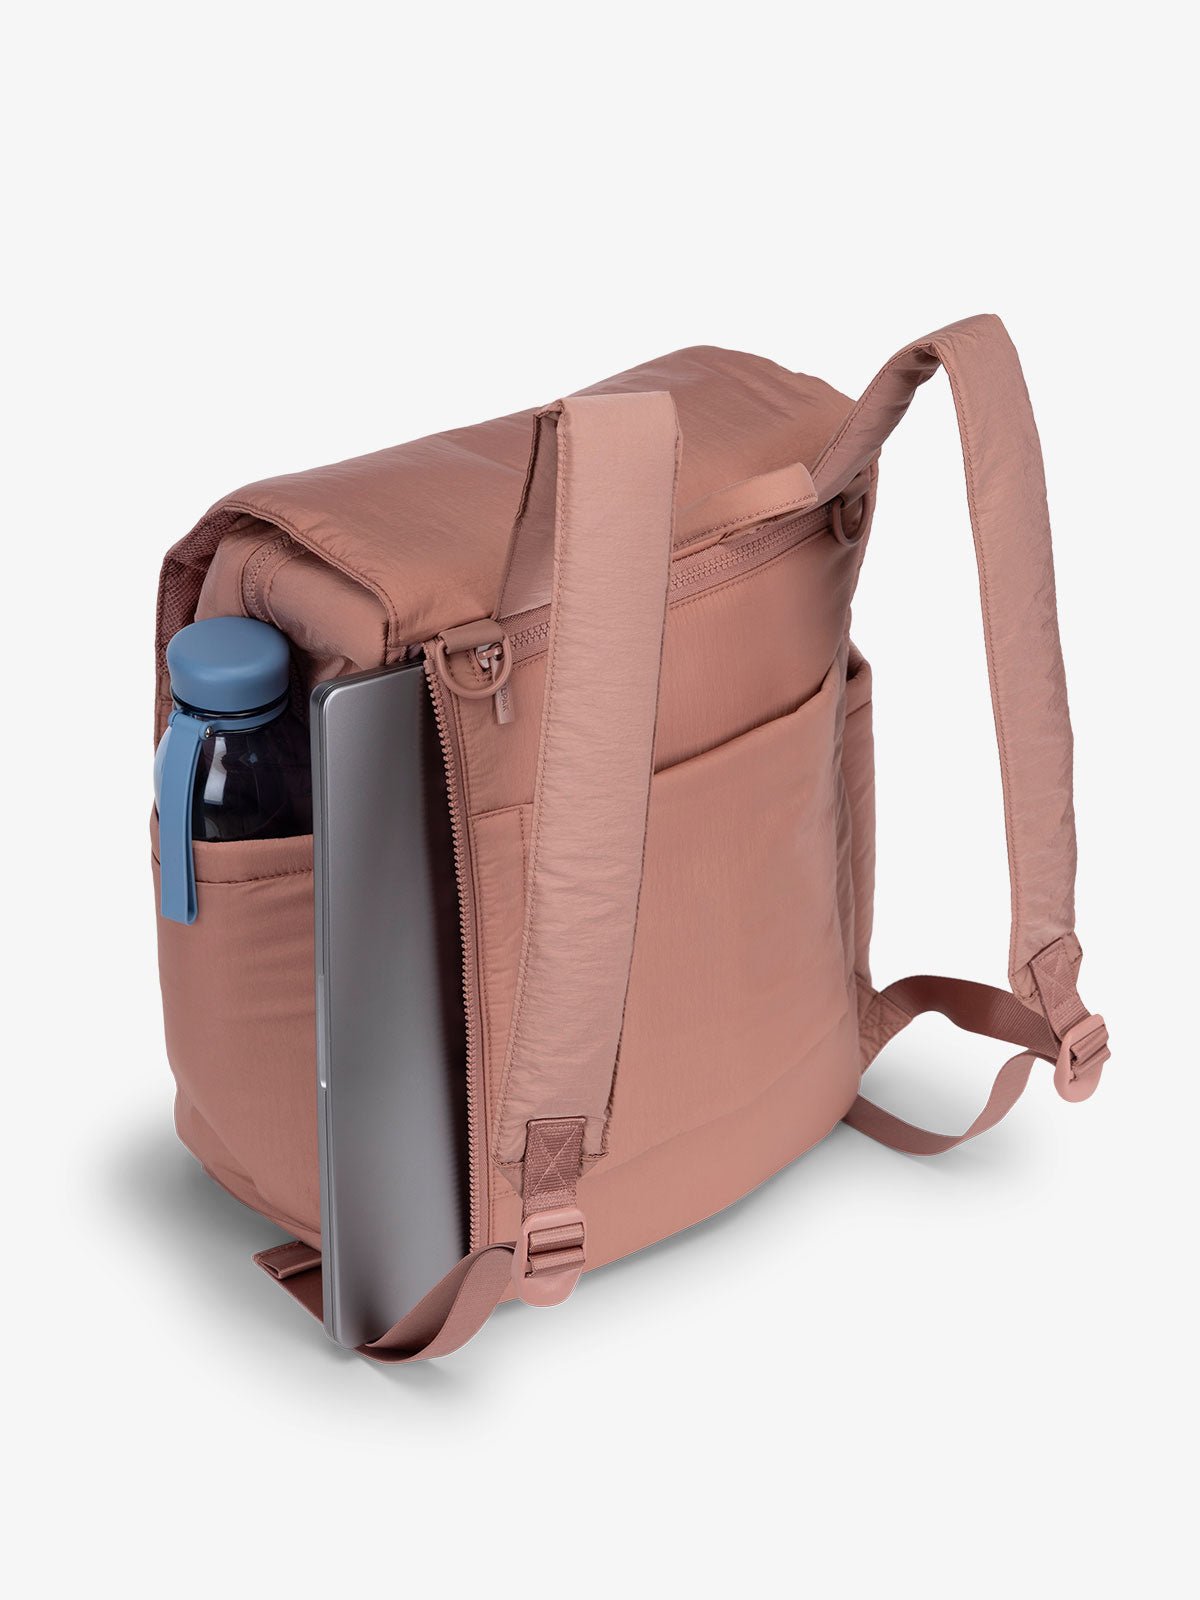 Pink CALPAK diaper backpack with 14 inch laptop sleeve and adjustable shoulder straps